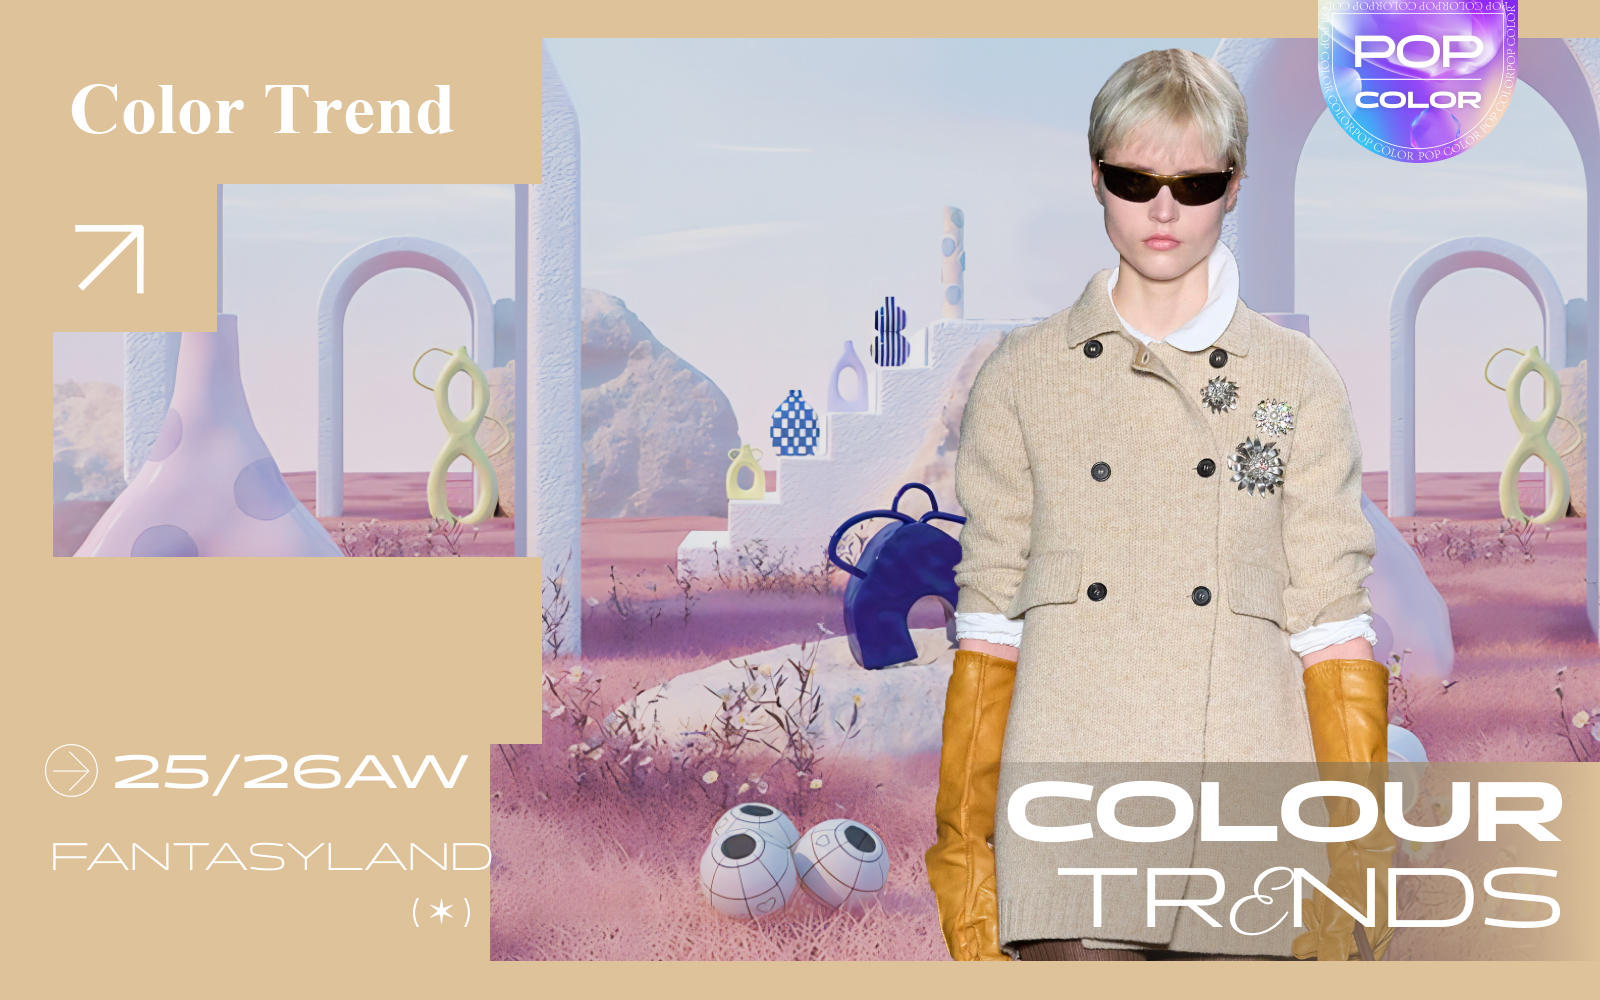 Fantasyland -- A/W 25/26 Color Trend for Womenswear